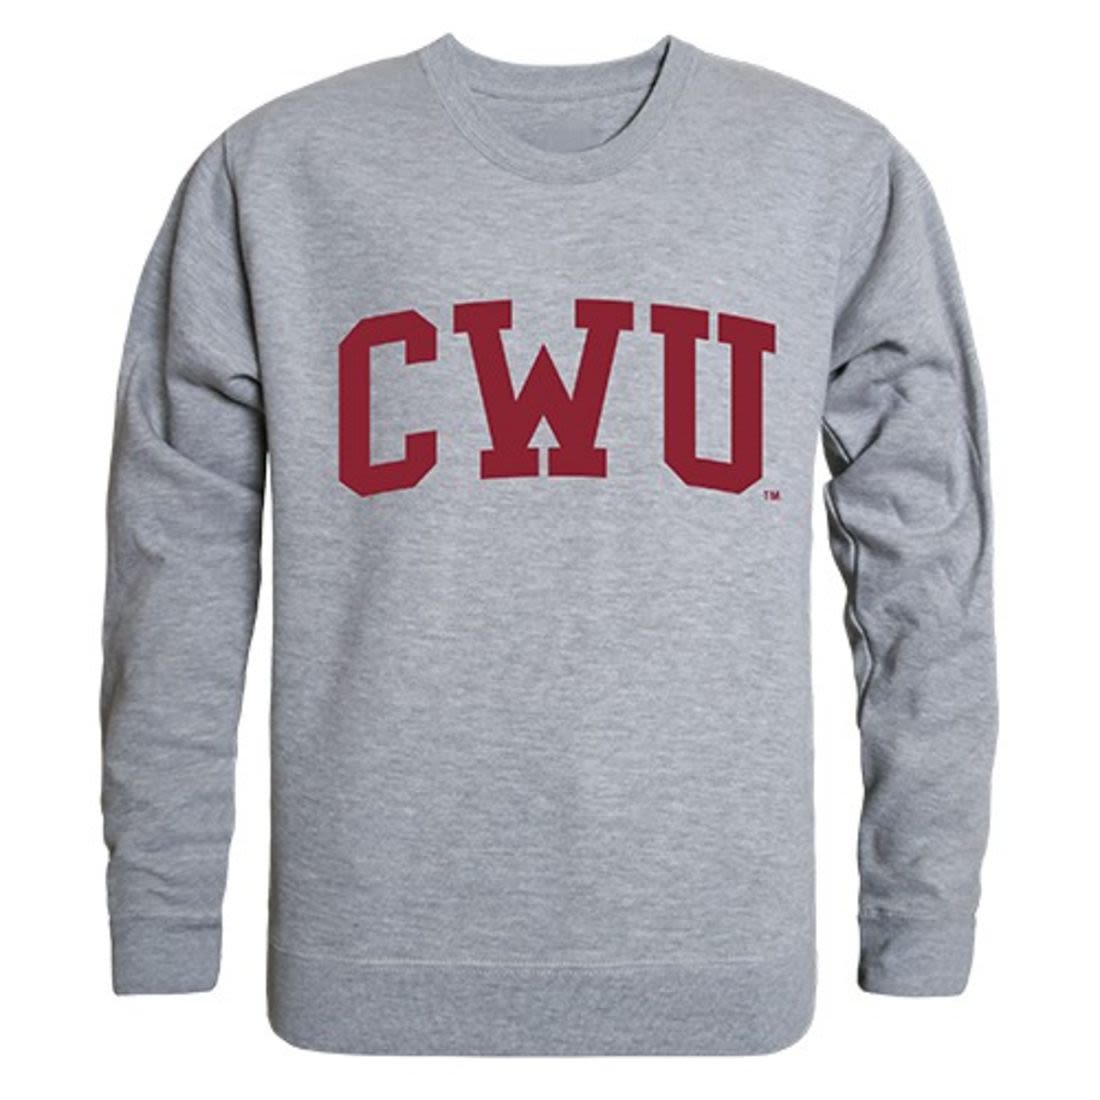 CWU Central Washington University Game Day Crewneck Pullover Sweatshirt Sweater Heather Grey-Campus-Wardrobe